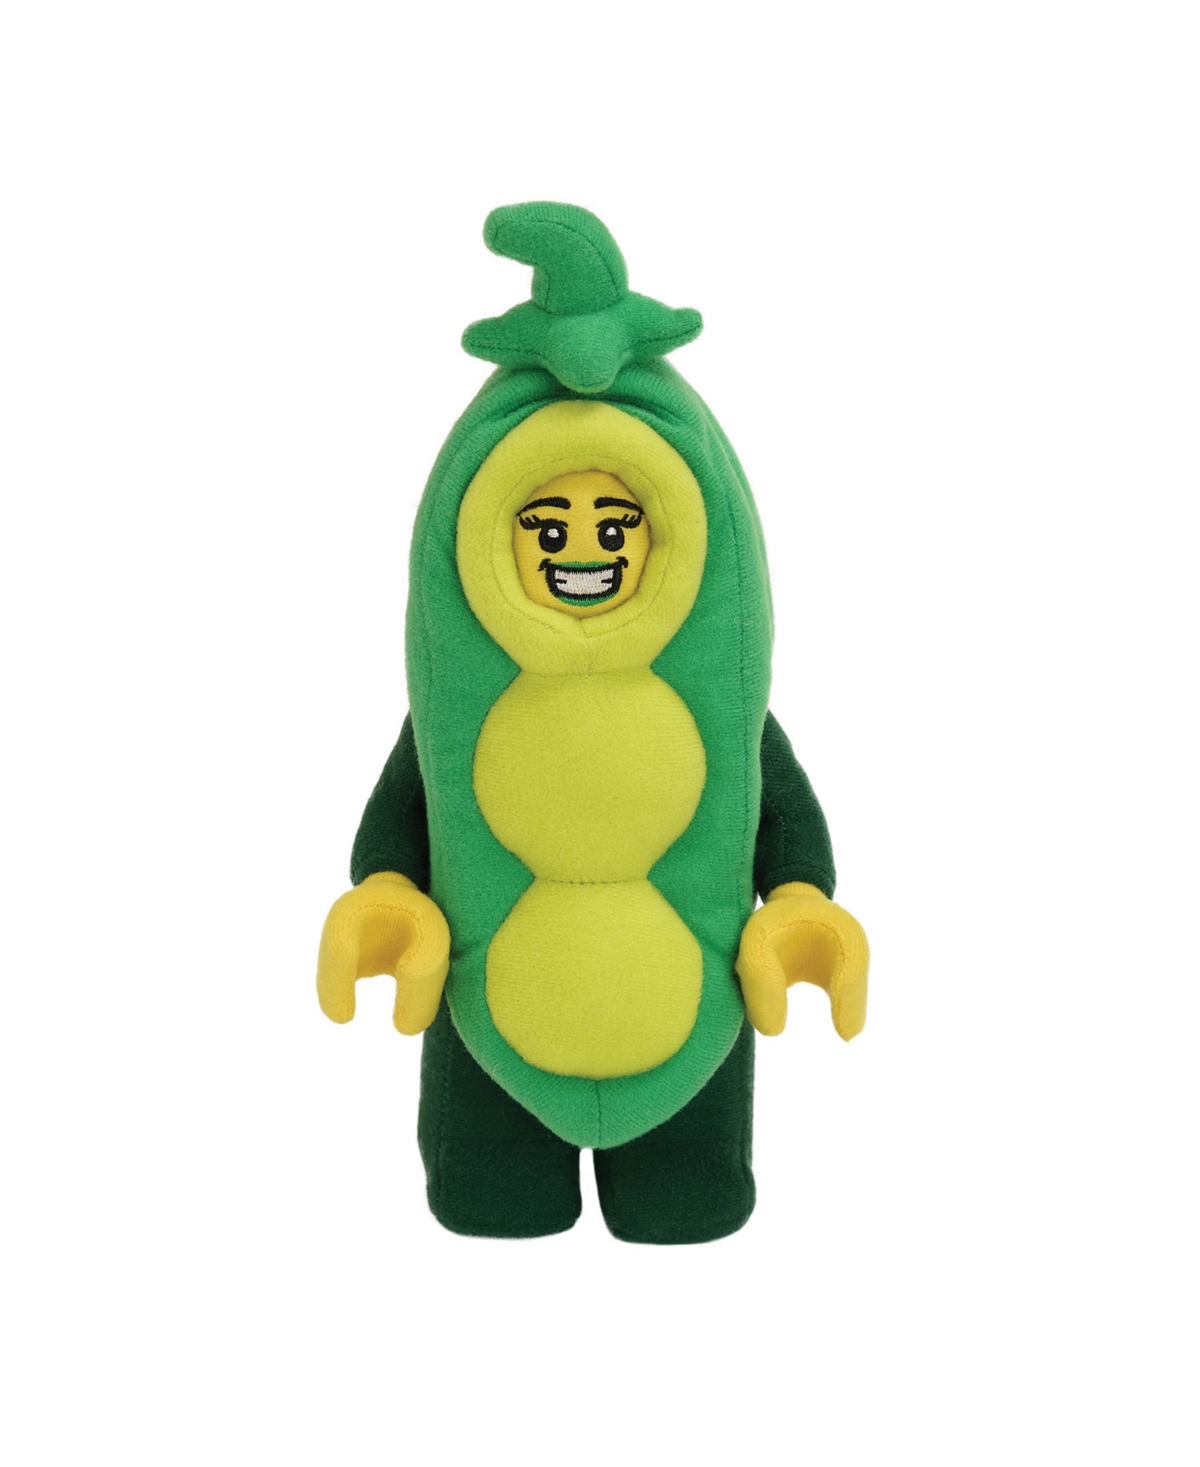 Manhattan Toy Company Lego Minifigure Peapod Costume Girl 9" Plush Character In Multicolor